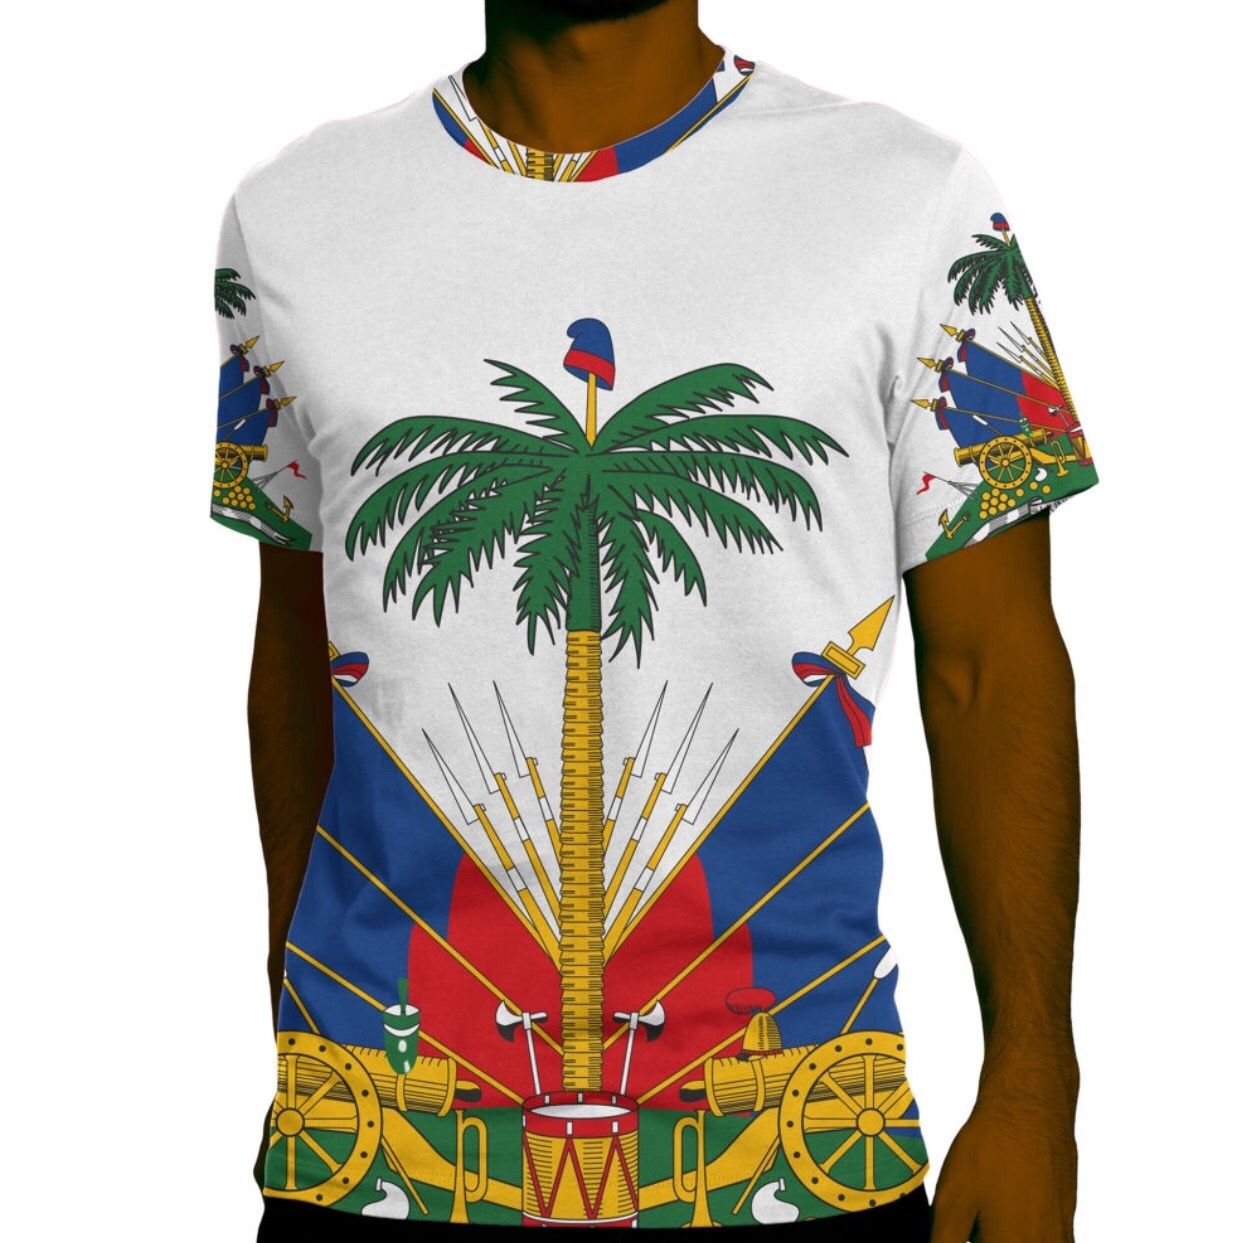 Haitian Festival shirt 🇭🇹